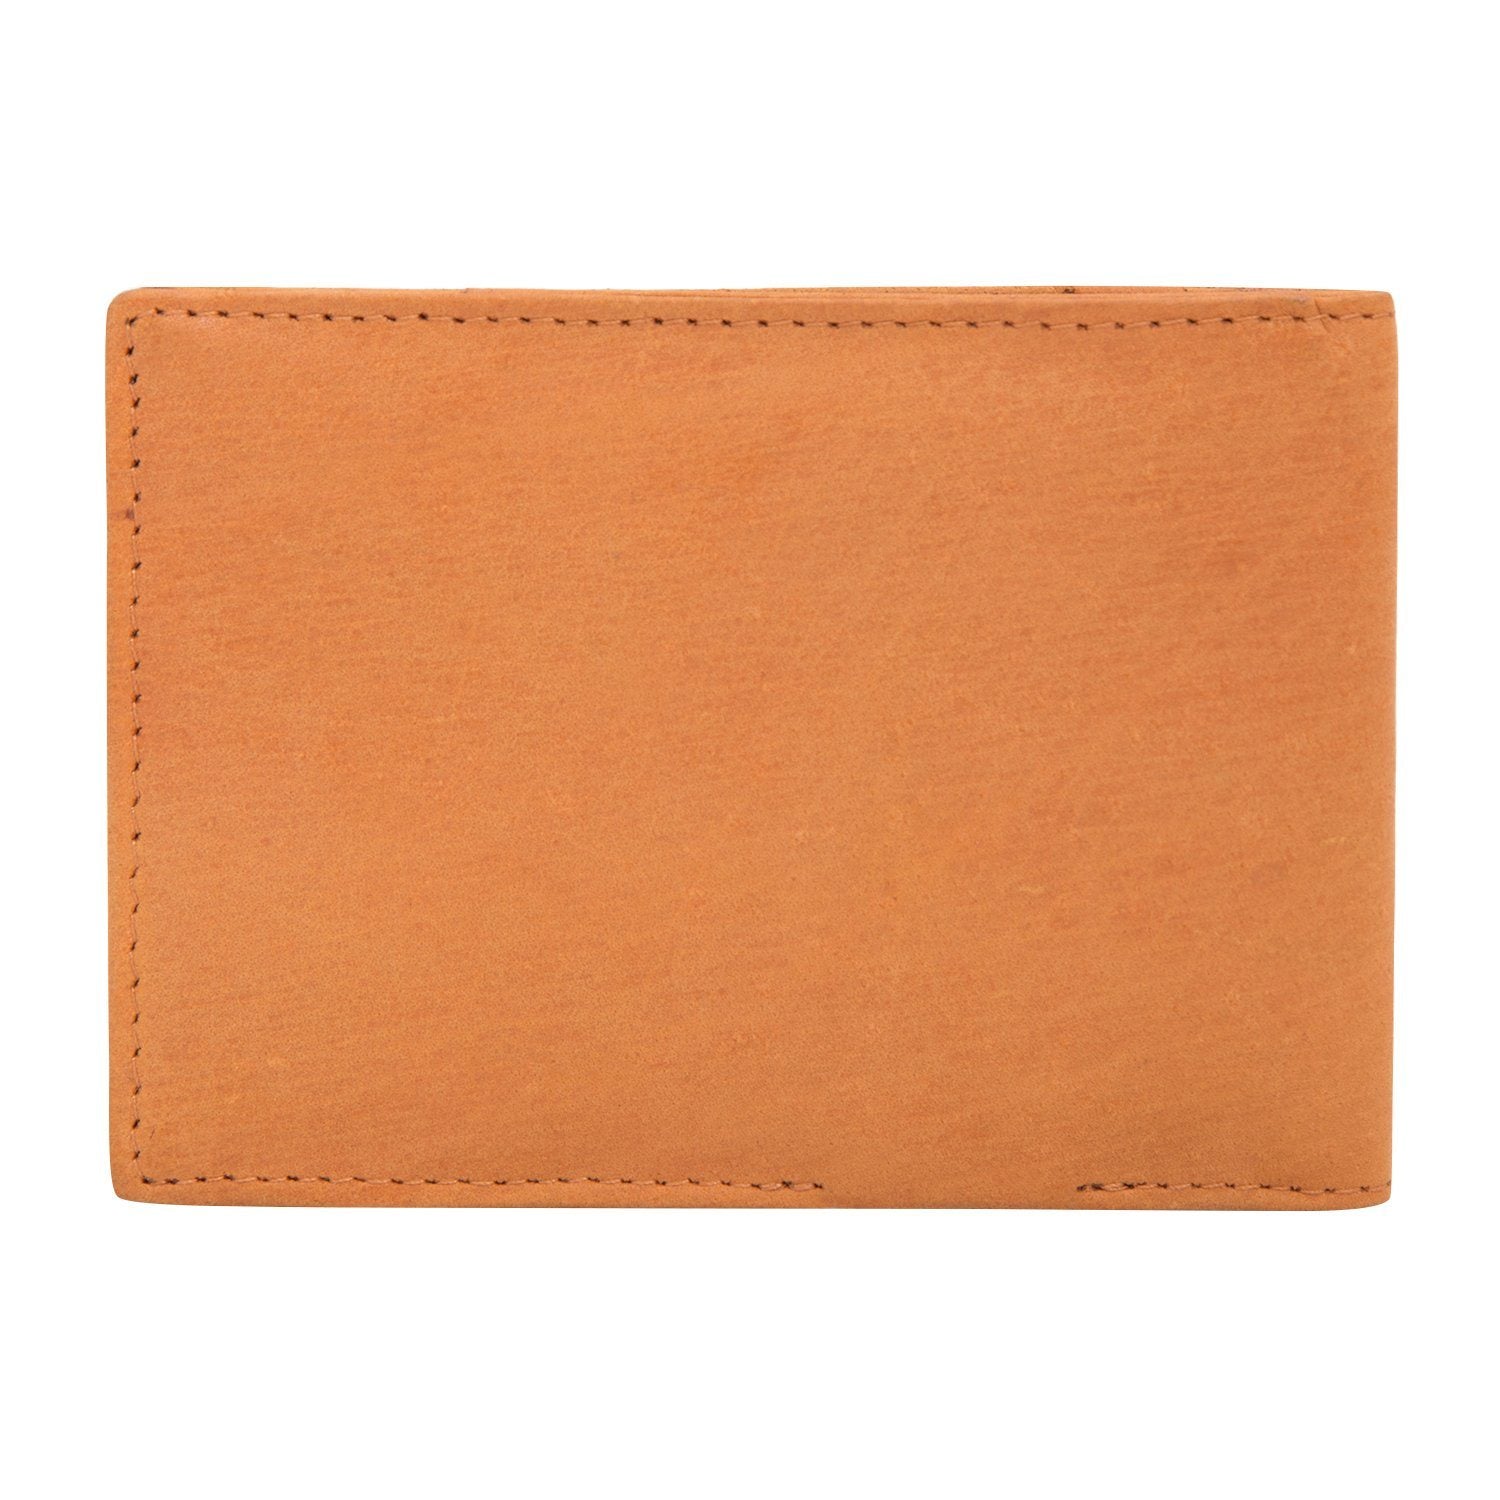 Tan Colour Italian Leather Money Clip/Slim Wallet (6 Card Slot + Money Clip) Cathy London 